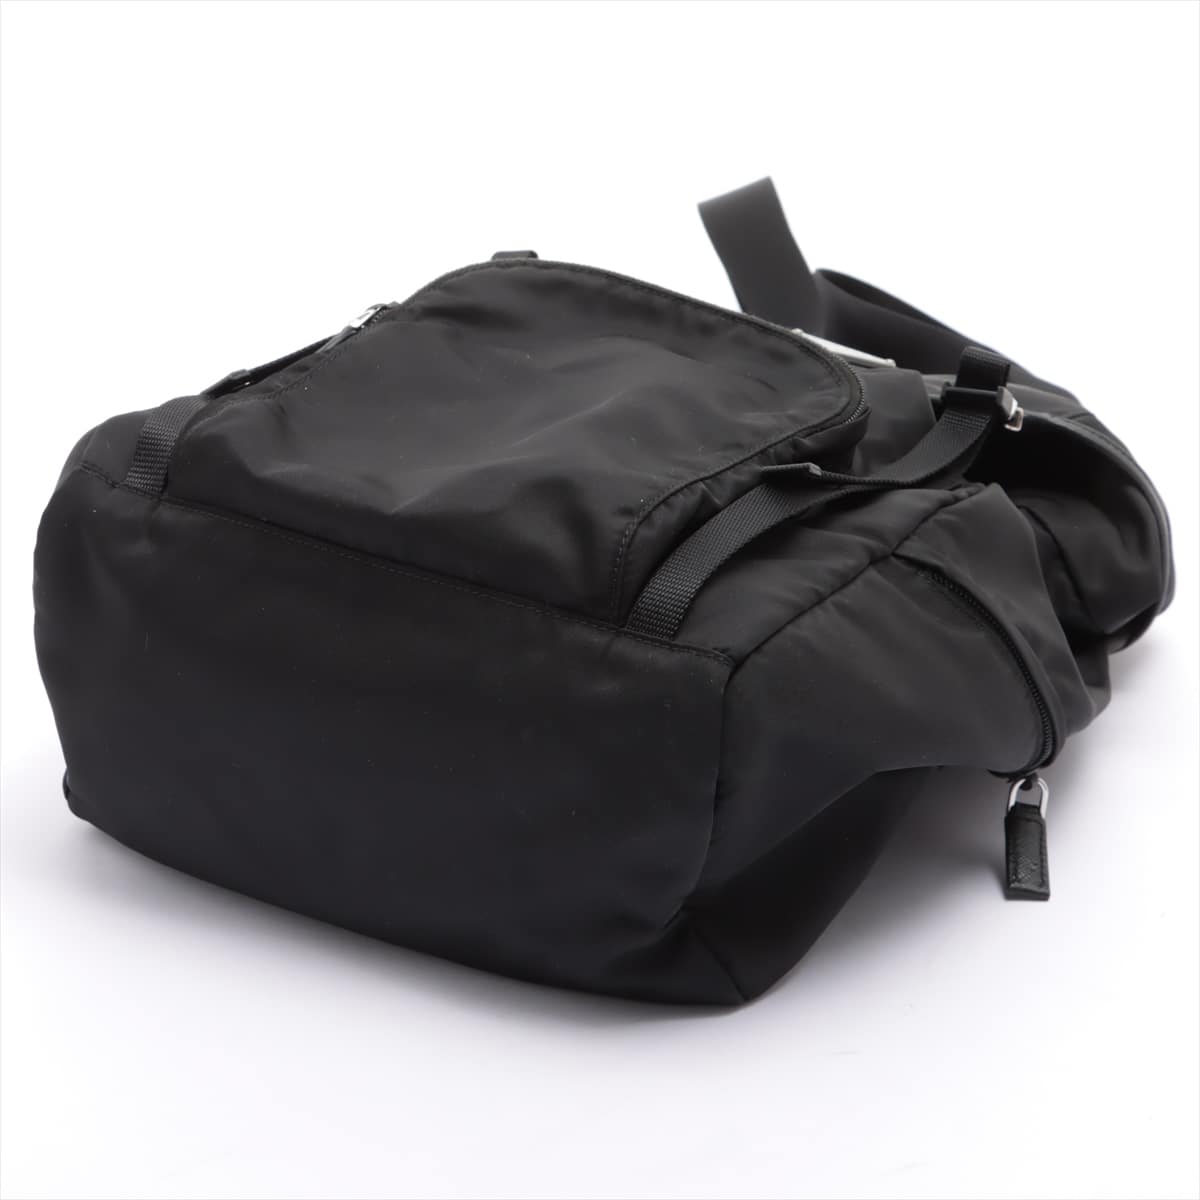 Prada Tessuto Nylon Backpack Black 1BZ039